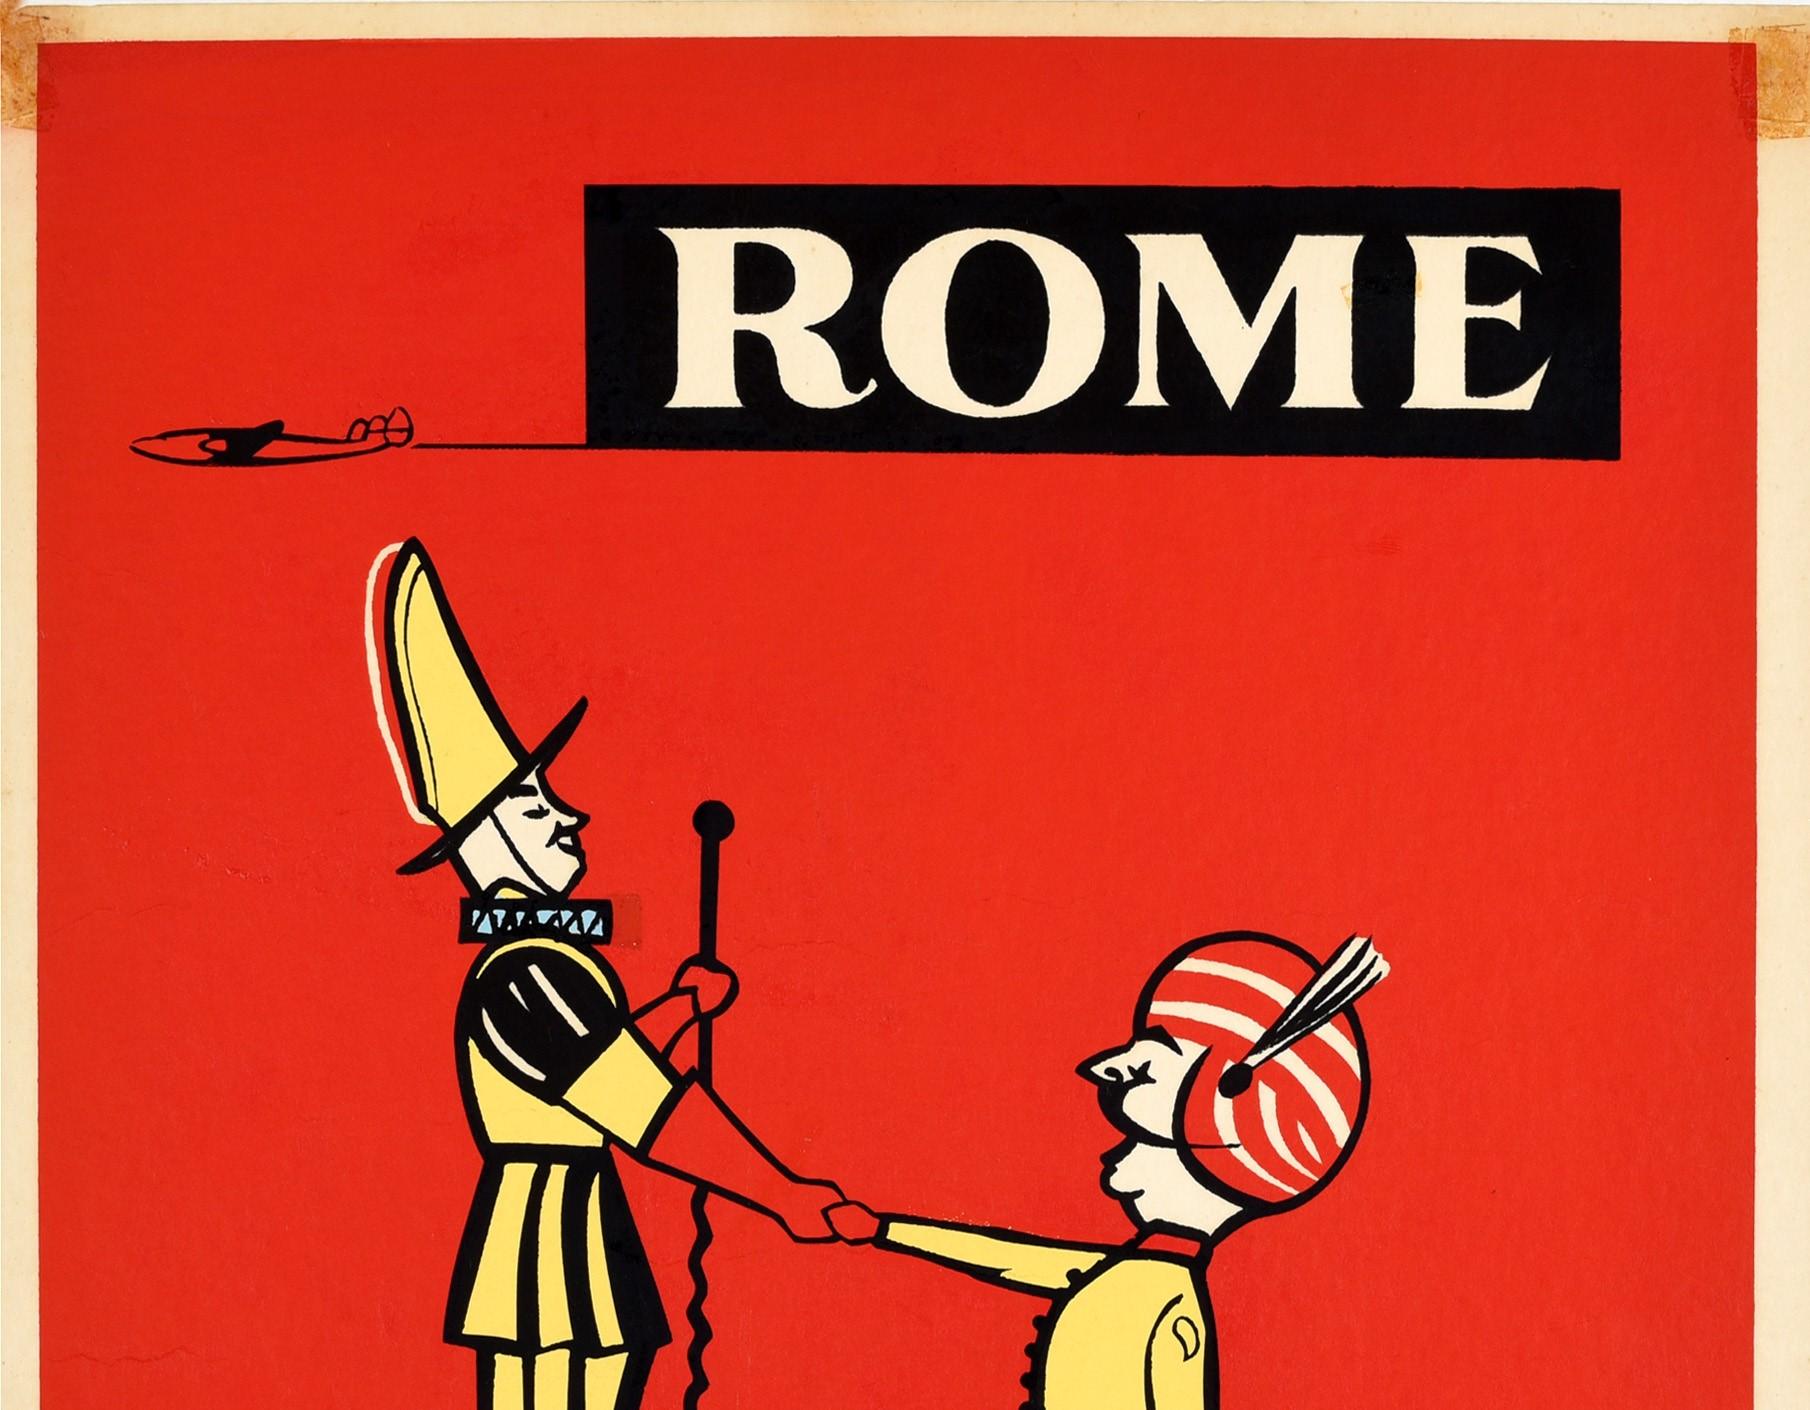 Original Vintage Travel Poster Air India Rome Italy Guard Maharaja Mascot Design - Print by Unknown